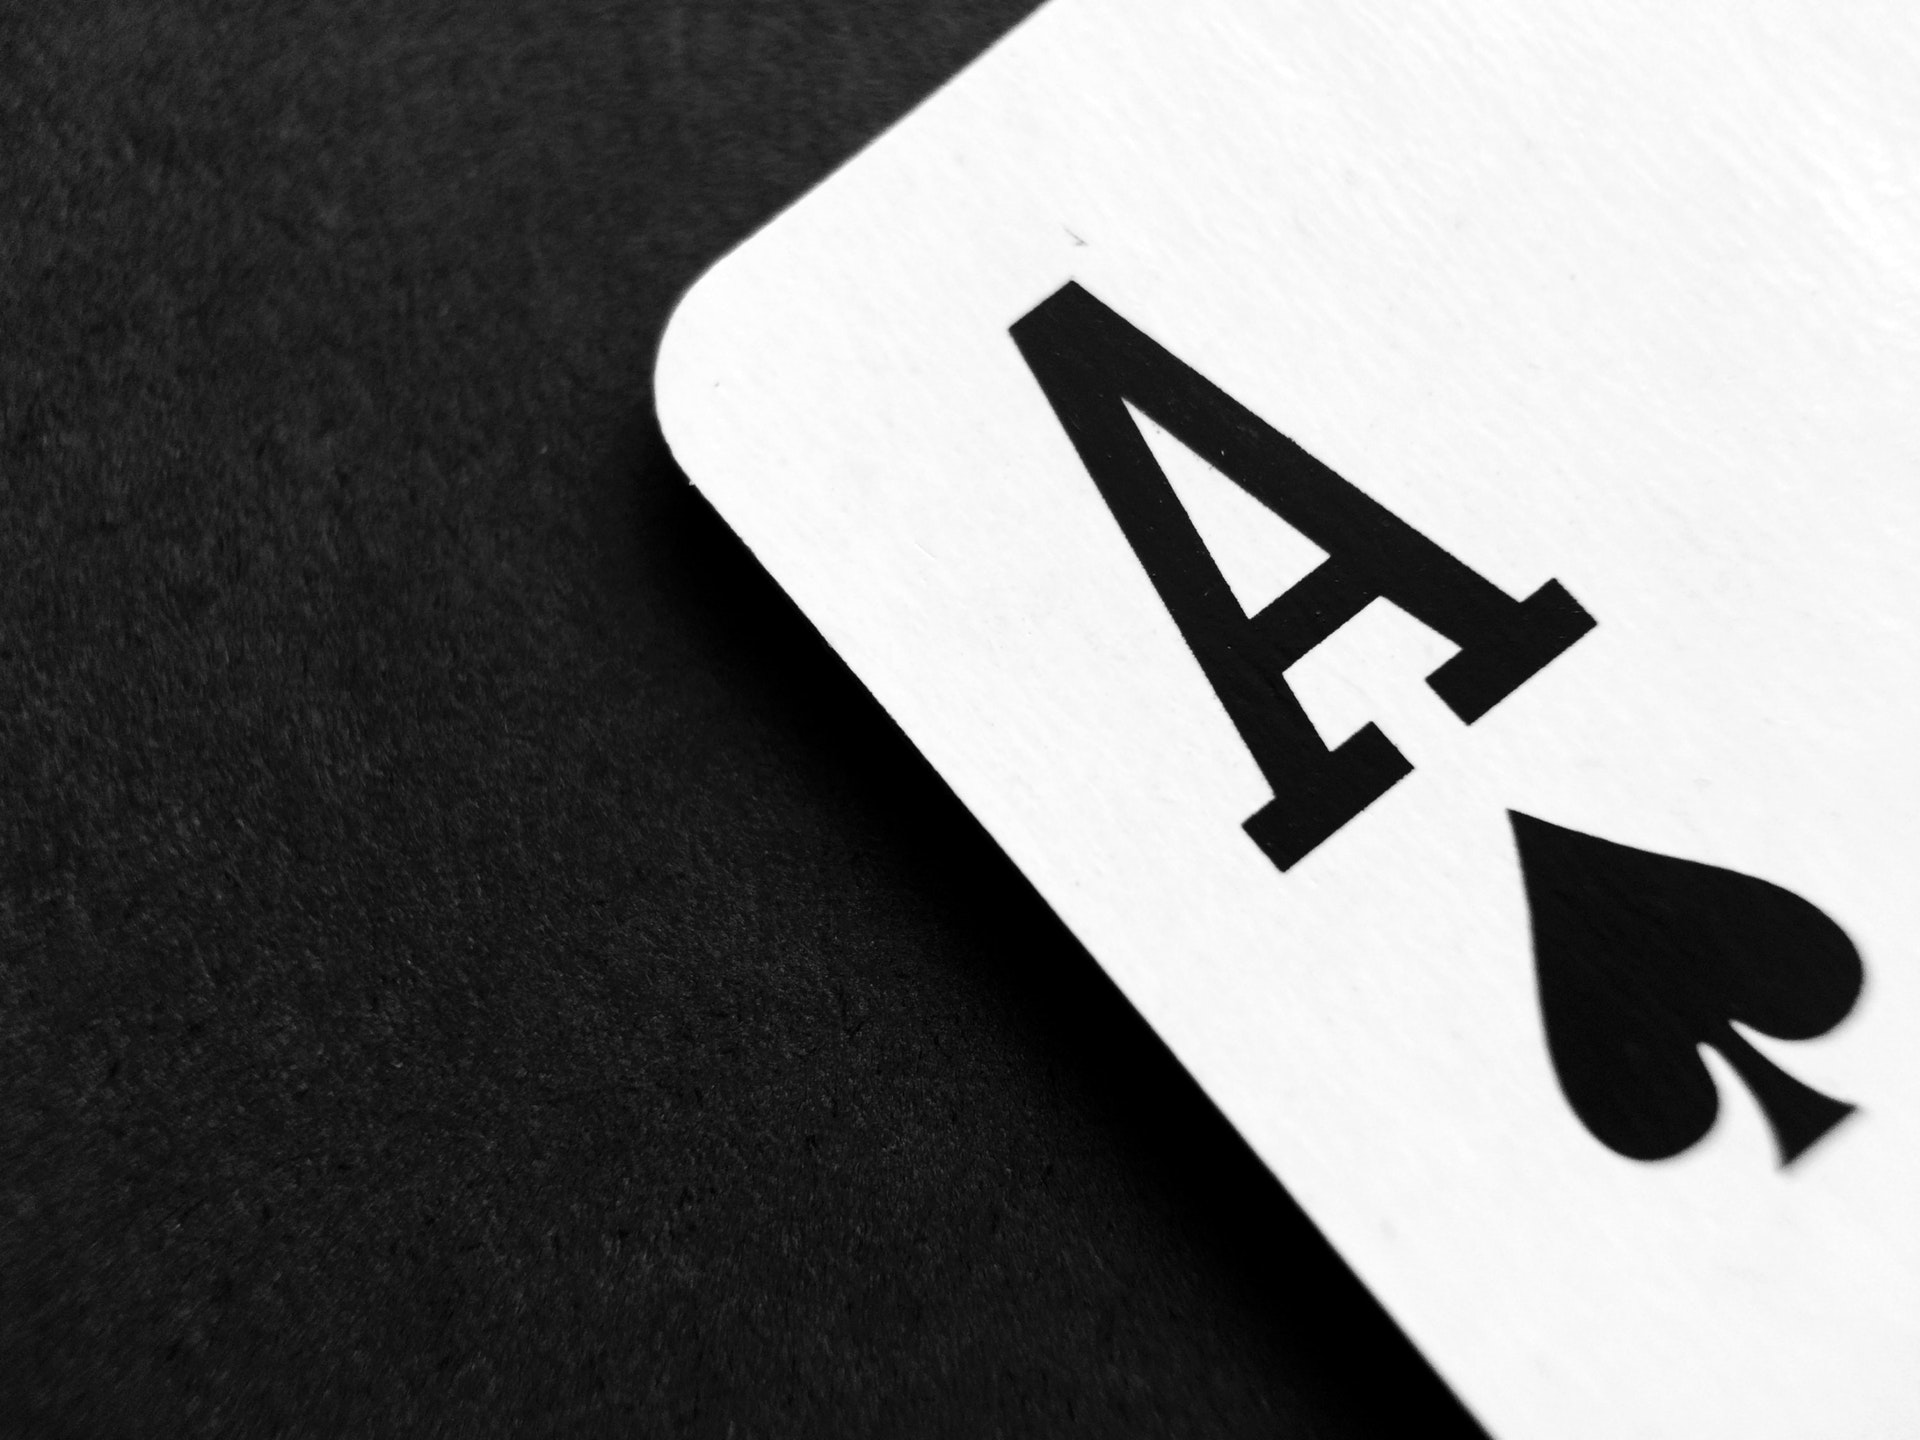 Best casino game: Slots, Roulette or Blackjack?